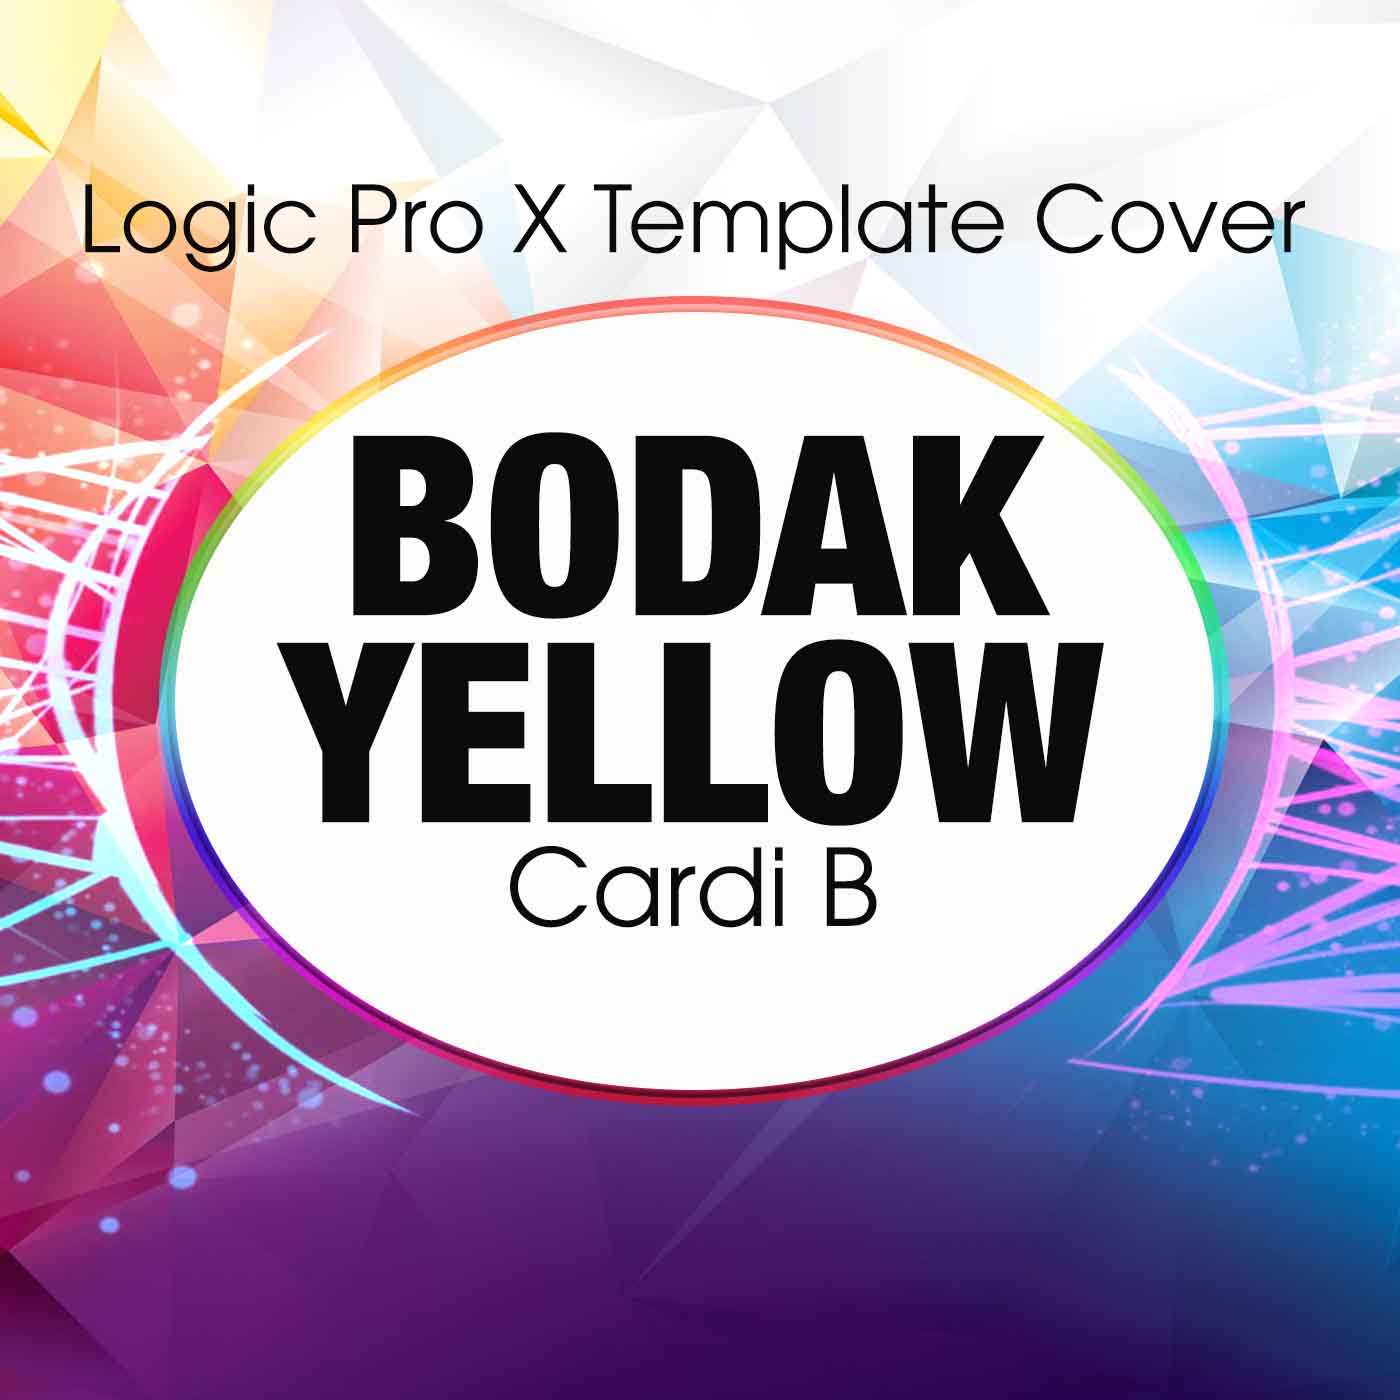 Bodak Yellow Cardi B Logic Pro X Remake Template